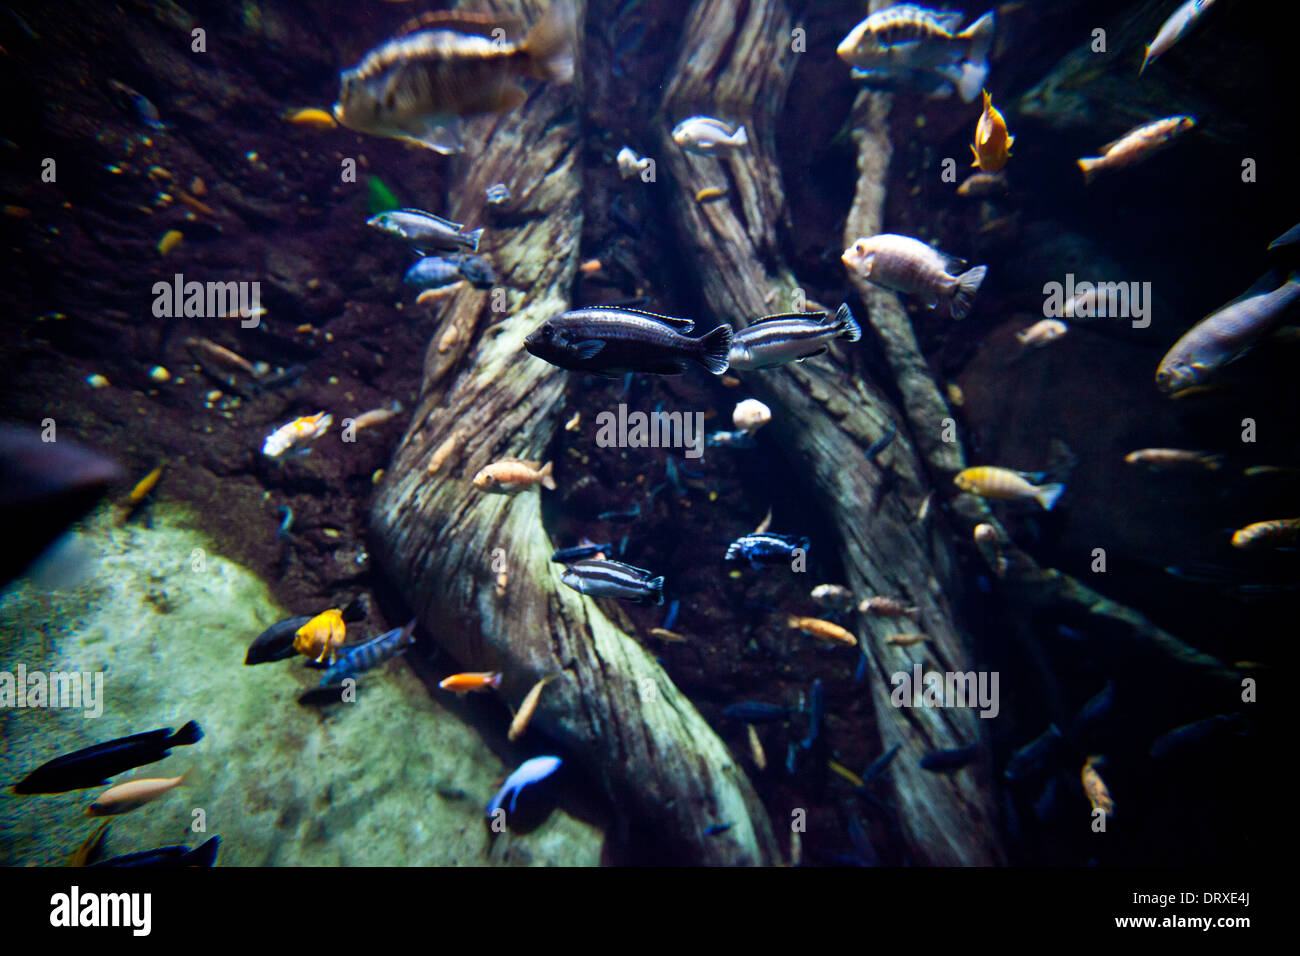 Brightly colored fish in the tropical exhibit at Atlanta's Aquarium. Stock Photo